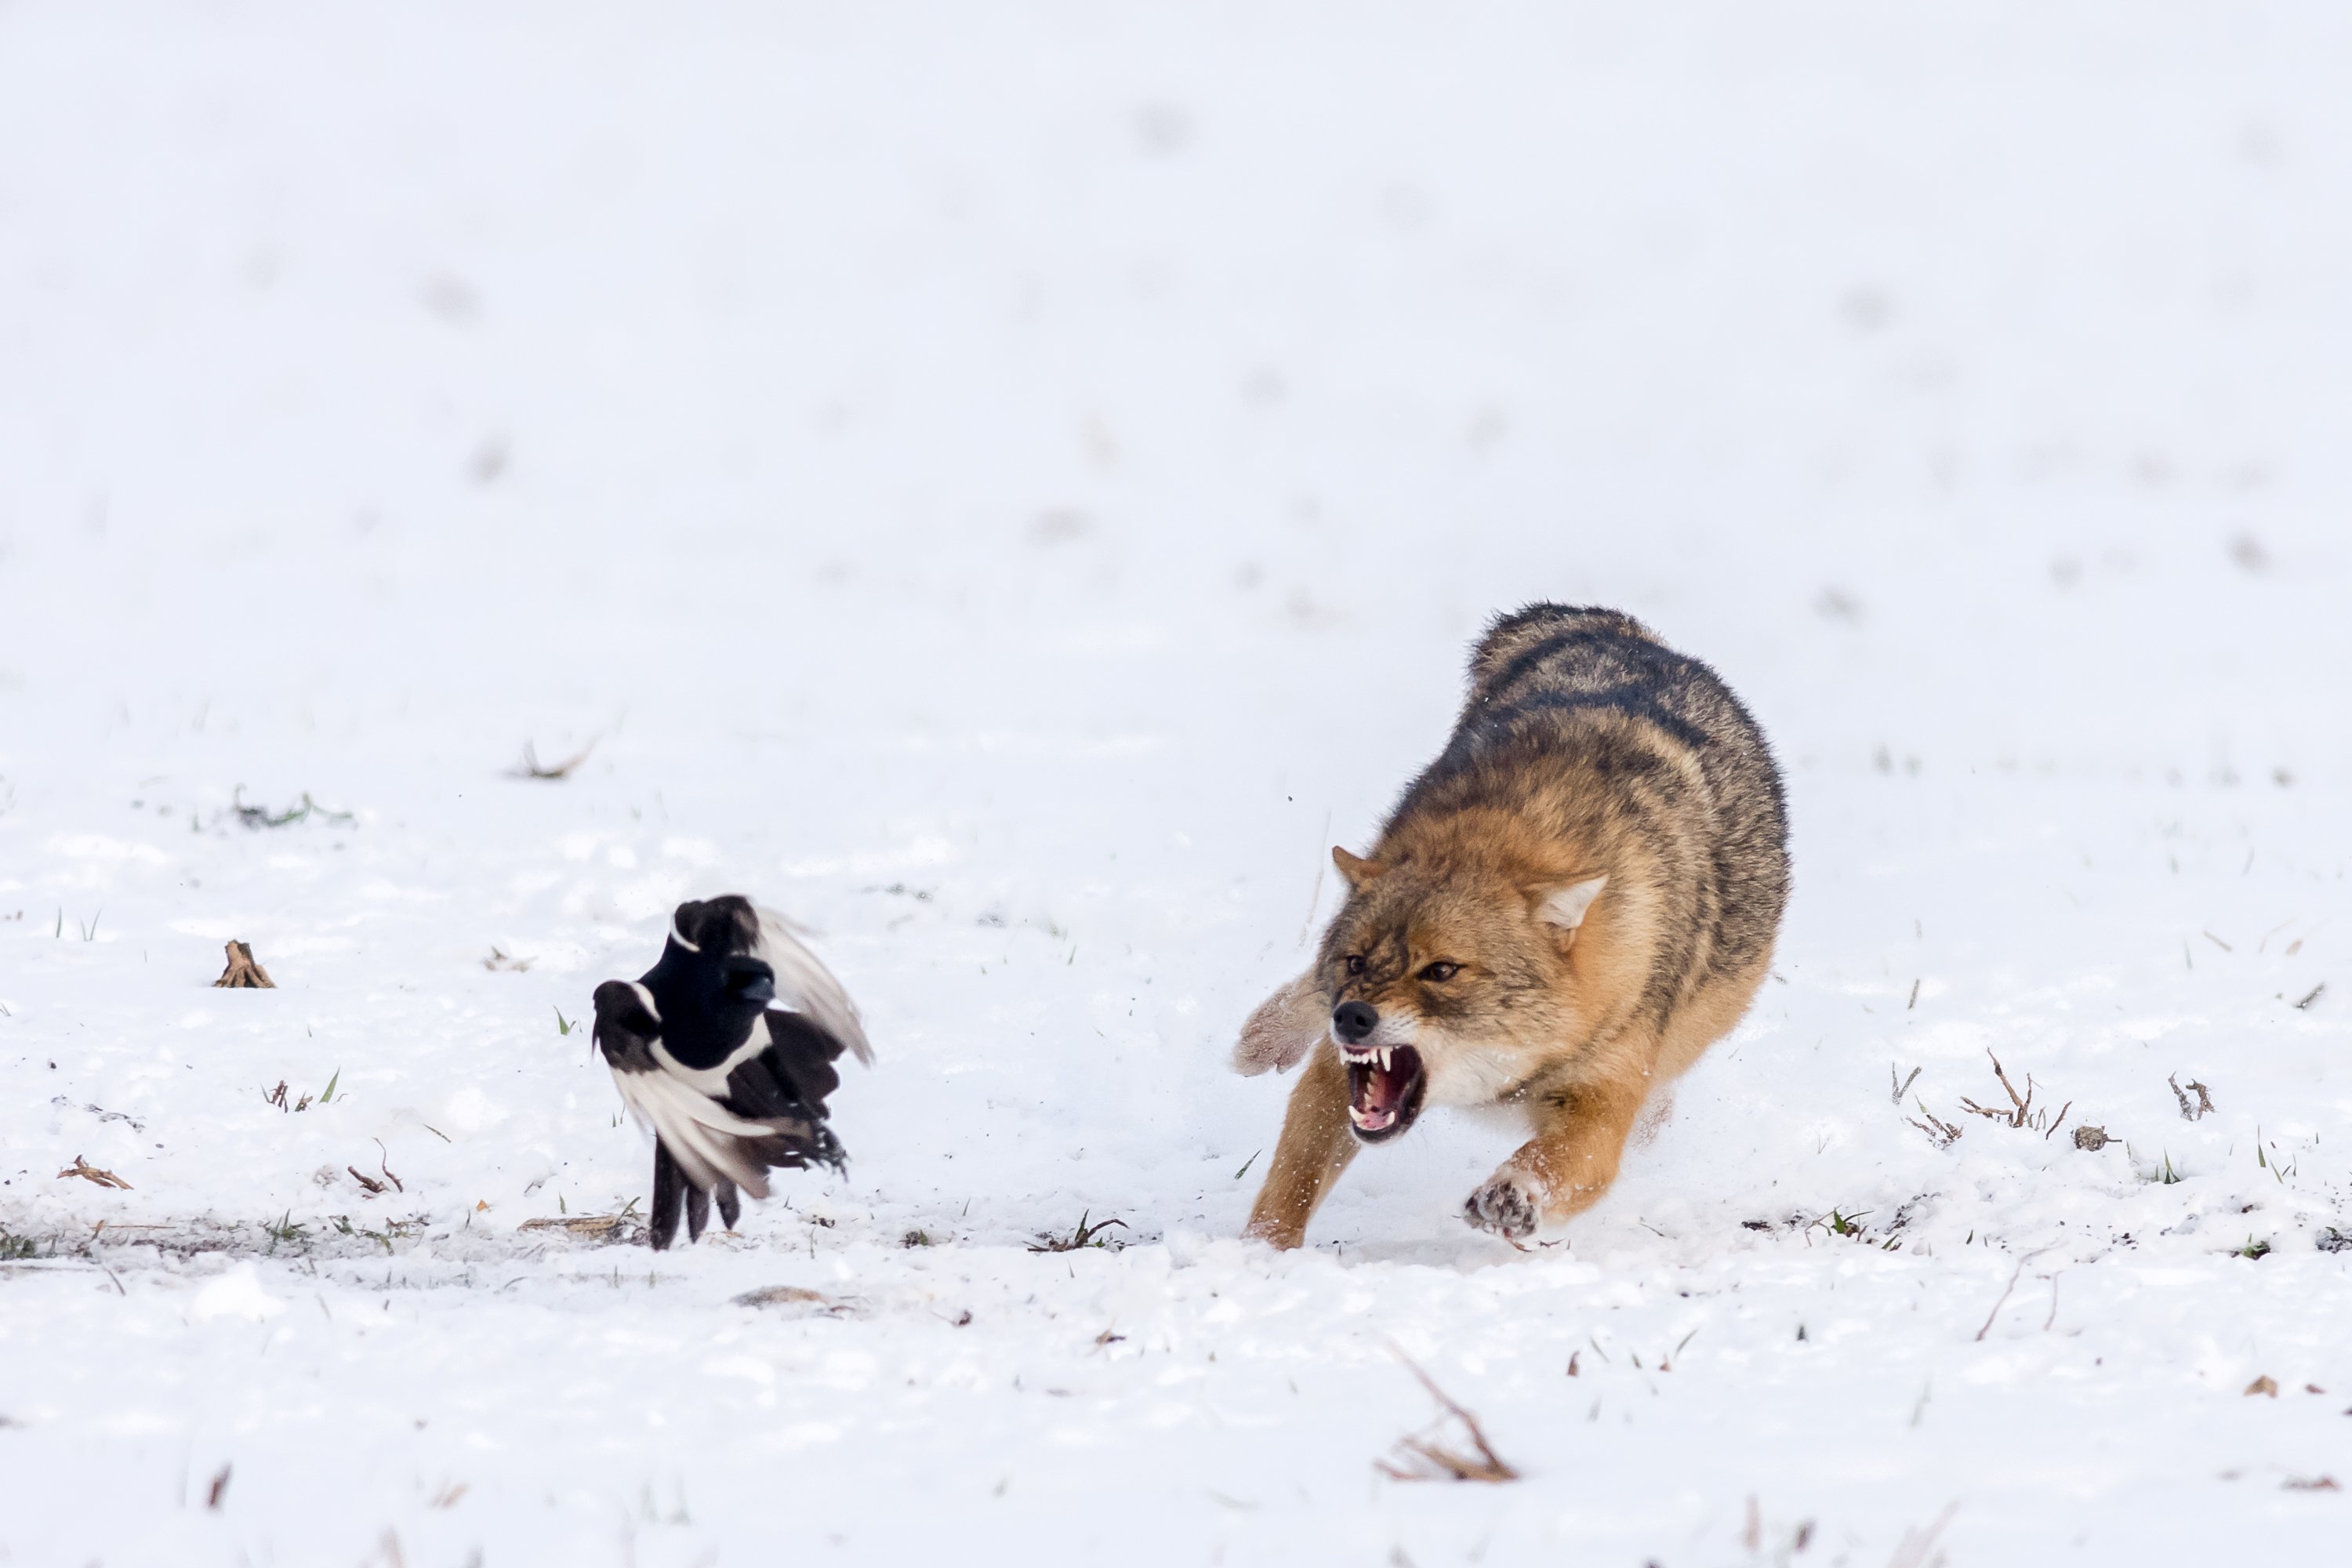 #winter #white #jackal #roar #wildlife #snow #bird #running_animal #animal #action #fury #angry, Nikolay Nikolov